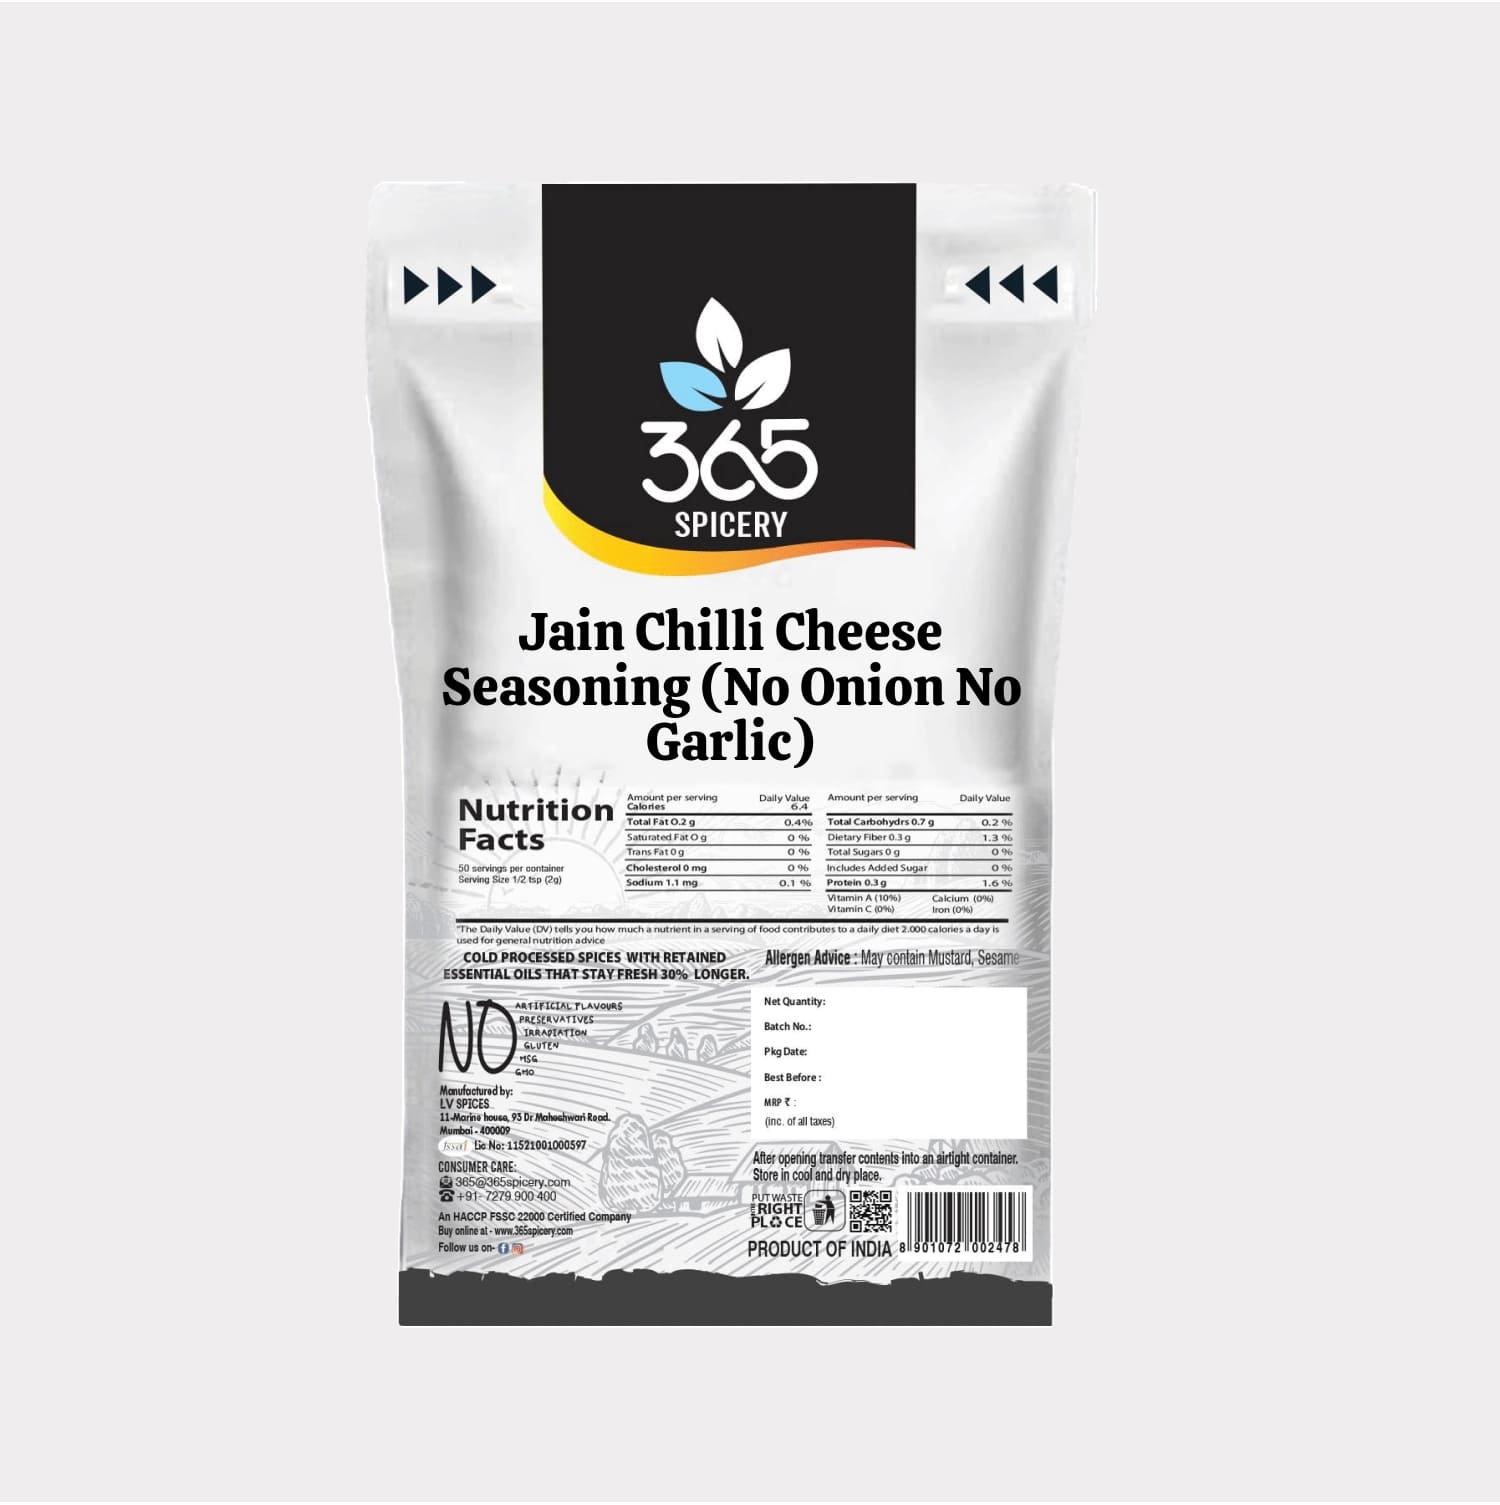 Jain Chilli Cheese Seasoning (No Onion No Garlic)